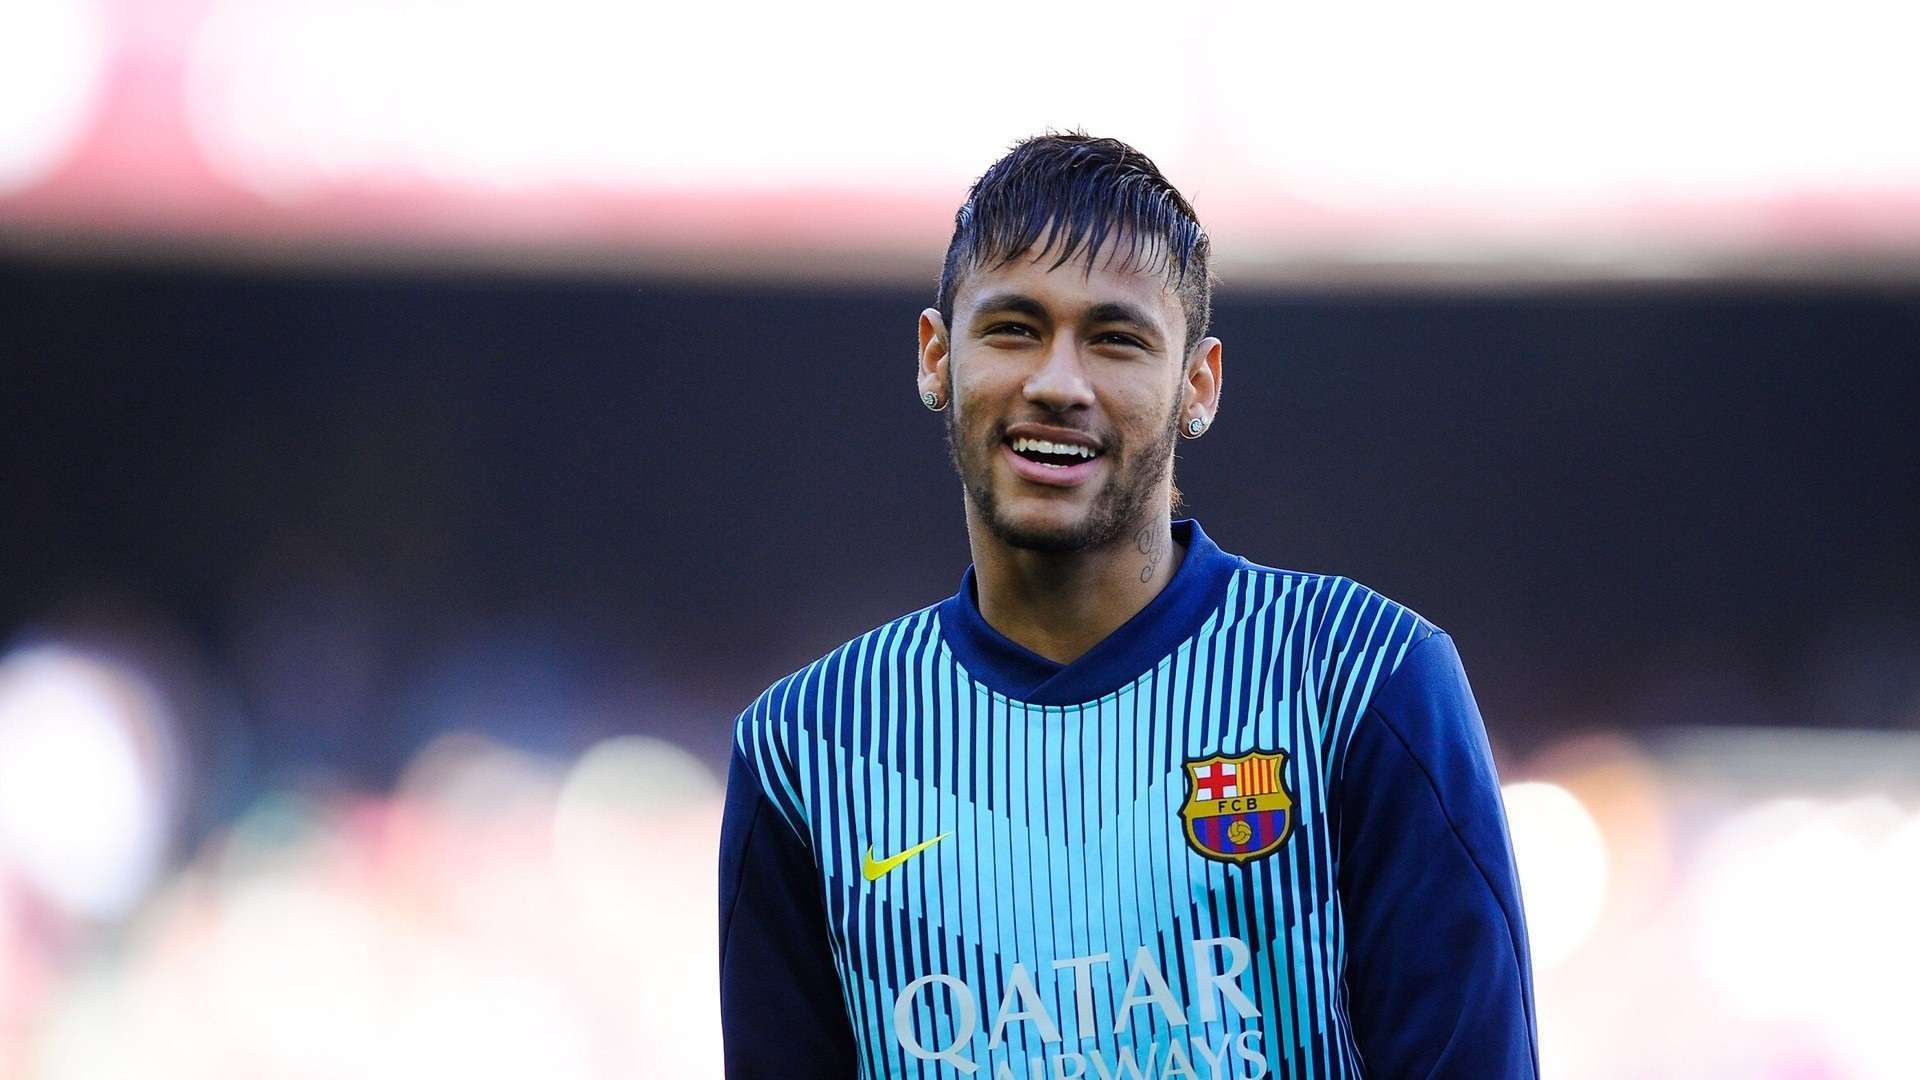 Neymar-jr-2017-big-smiling-wallpaper-1080p